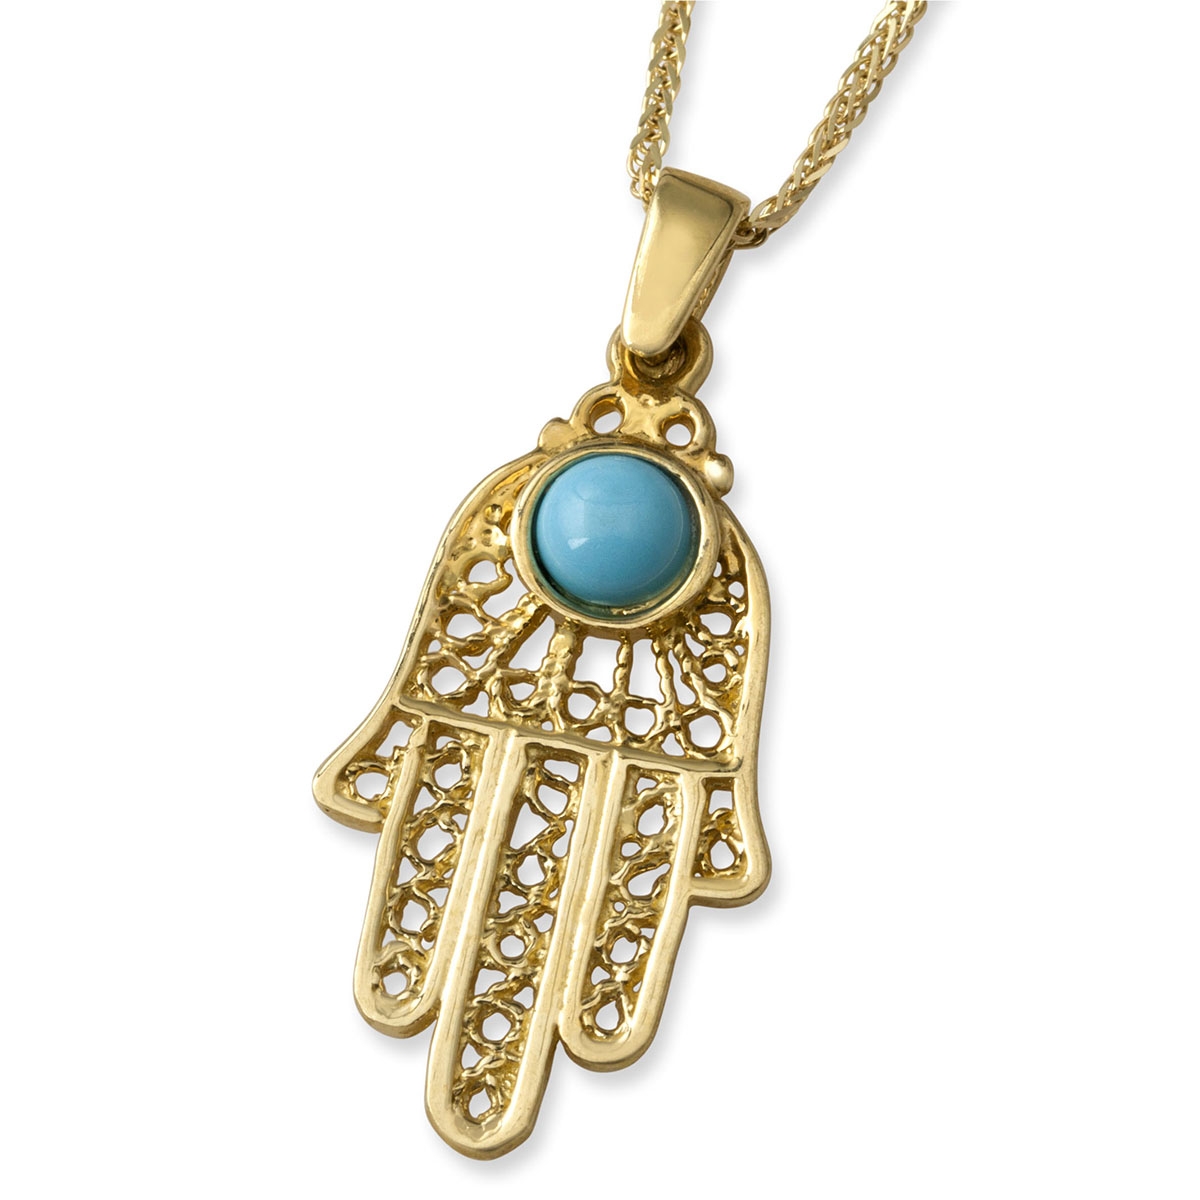 Large 14K Yellow Gold Filigree Hamsa Pendant Necklace With Turquoise Stone - 1